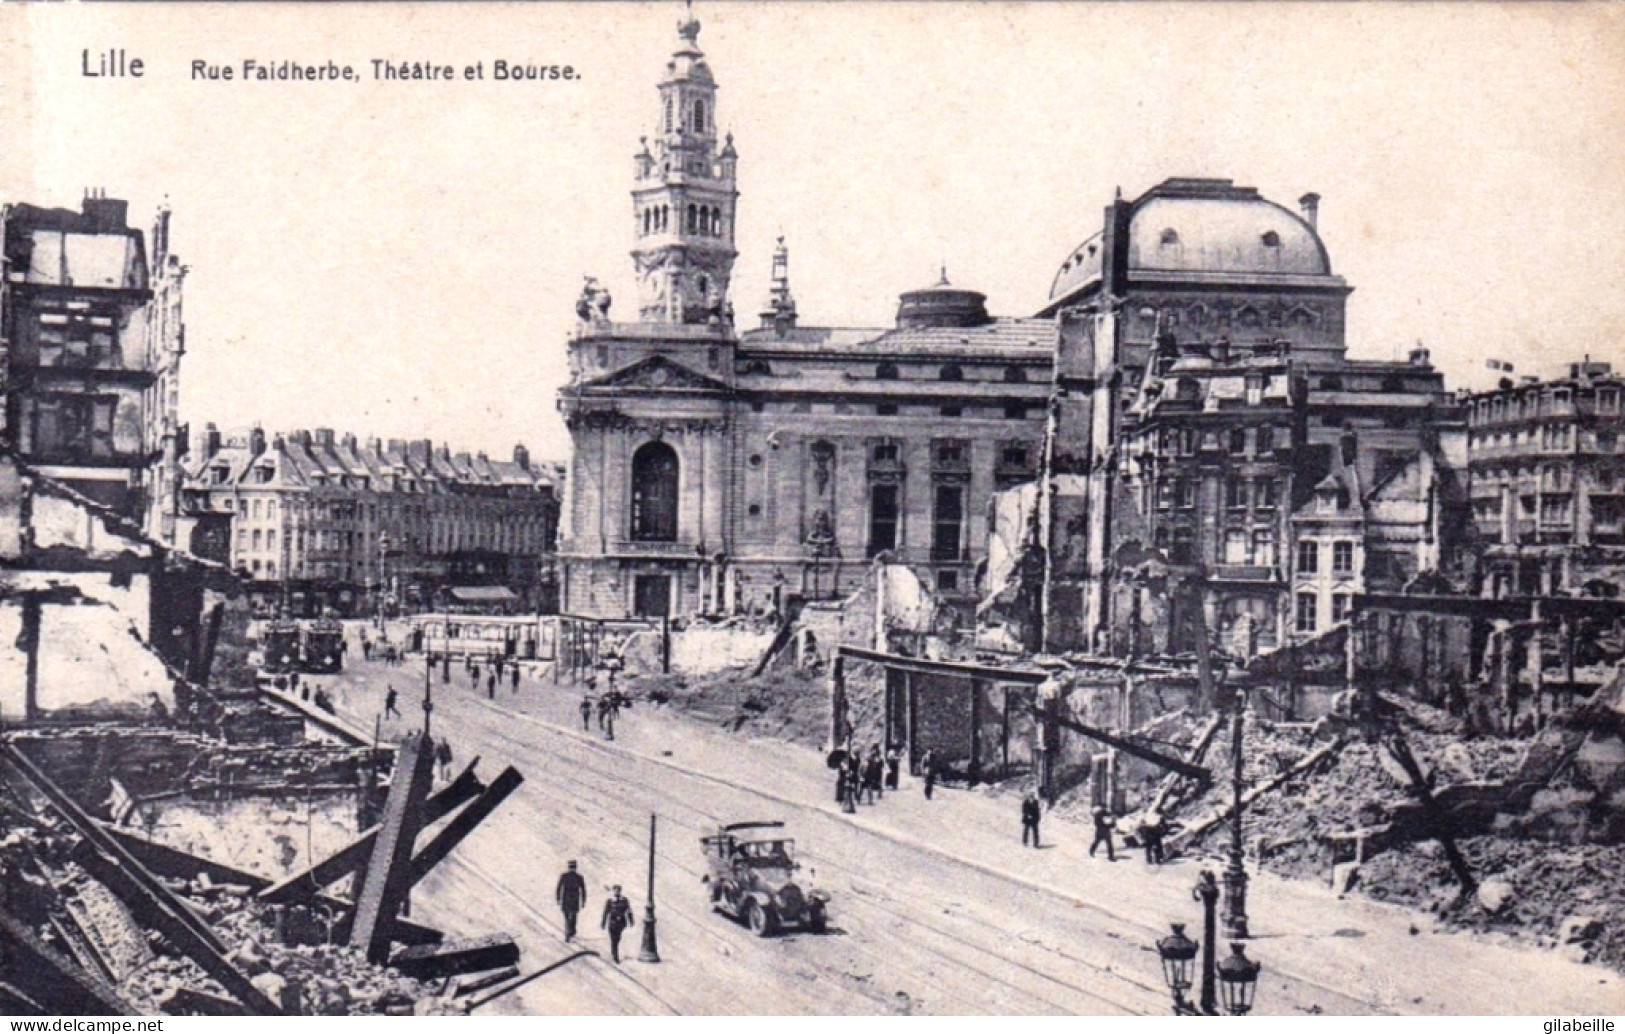 59 - LILLE -   Rue Faidherbe - Theatre Et Bourse -  Guerre 1914 - Lille